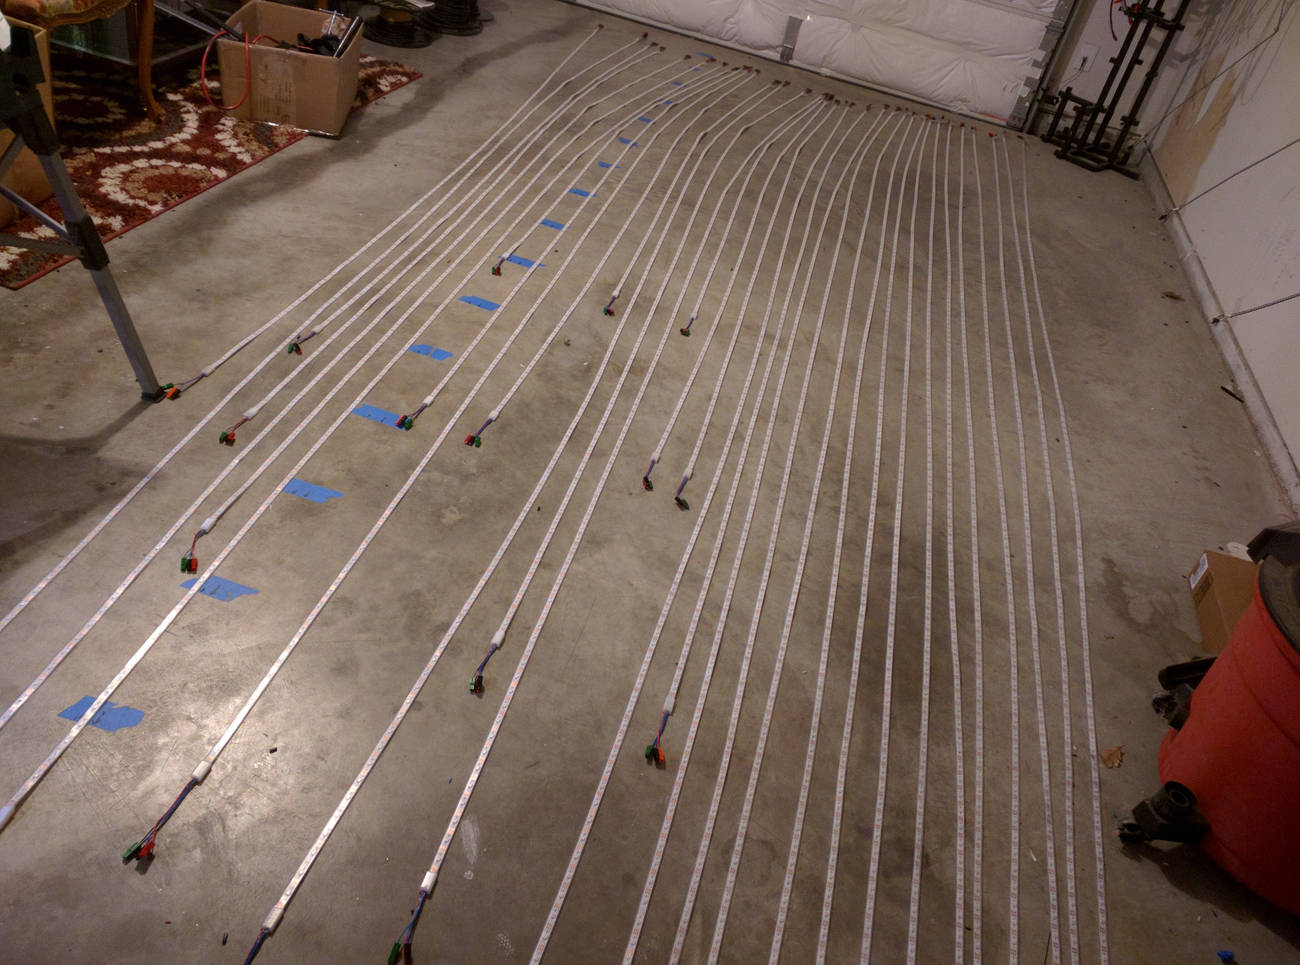 Precut led strips arranged on floor